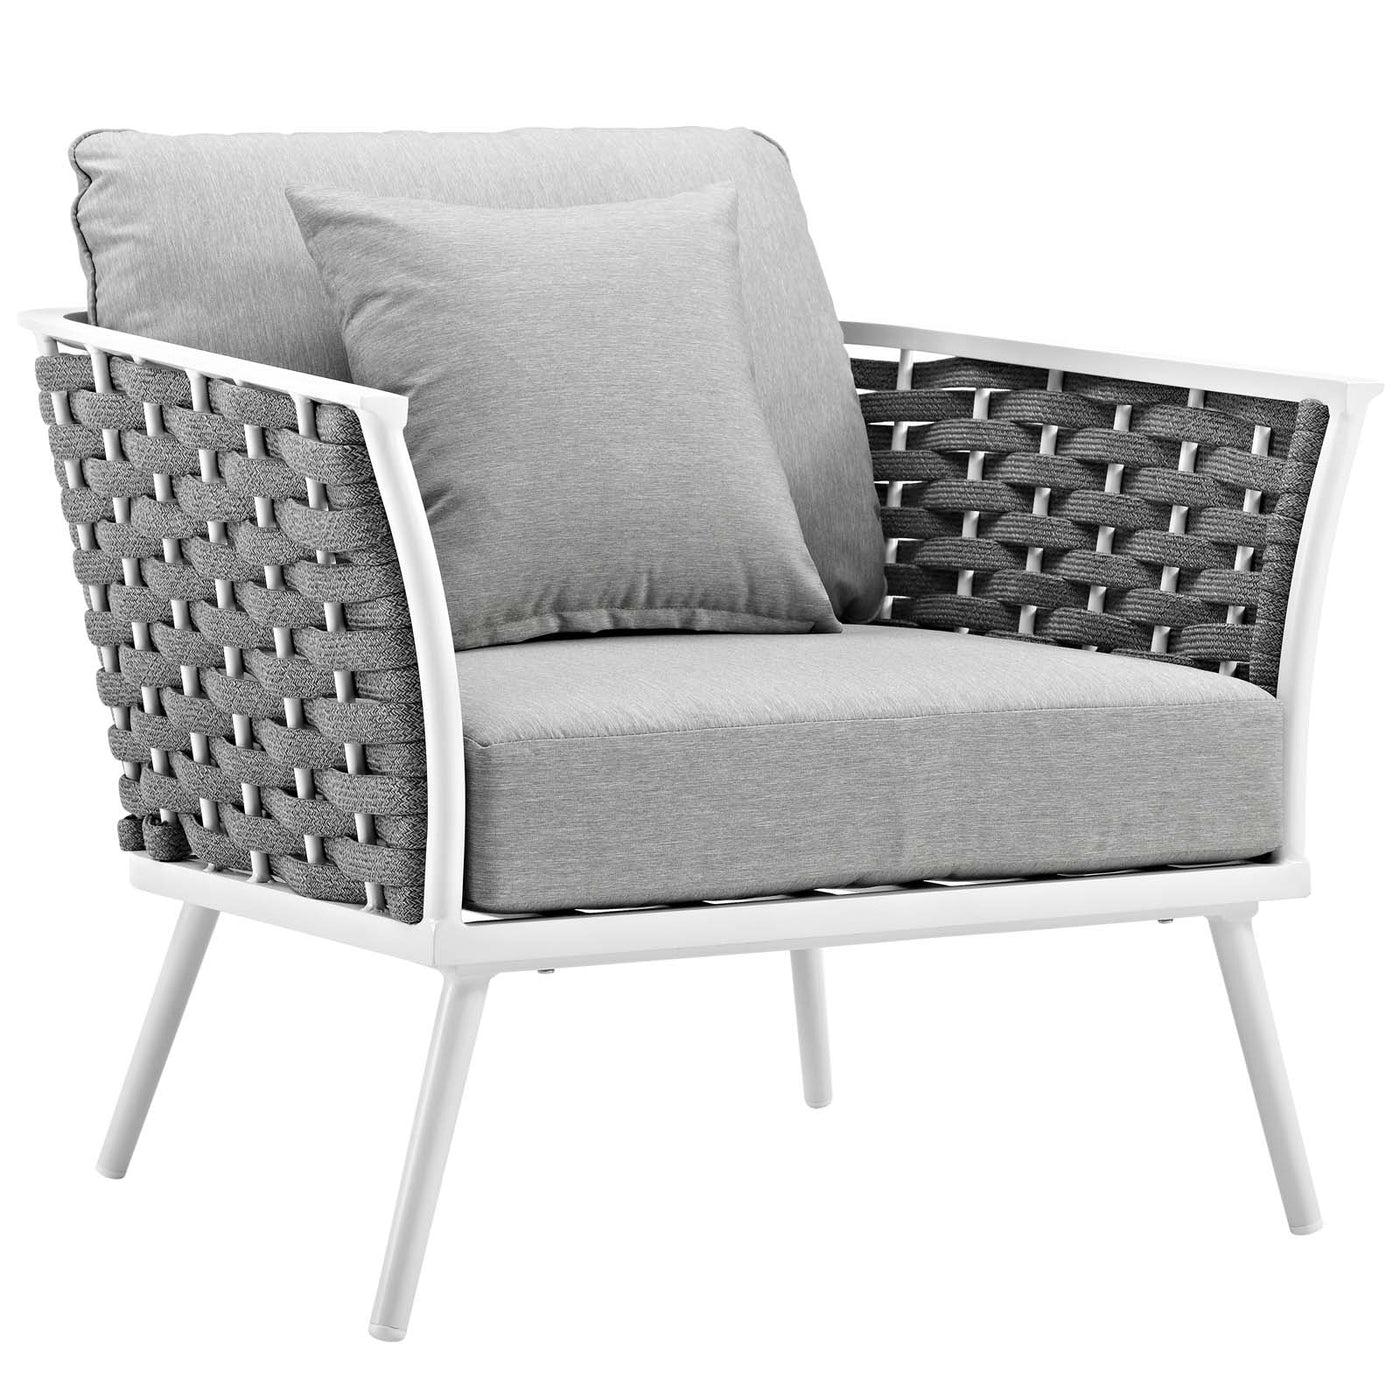 Stance 5 Piece Outdoor Patio Aluminum Sectional Sofa Set